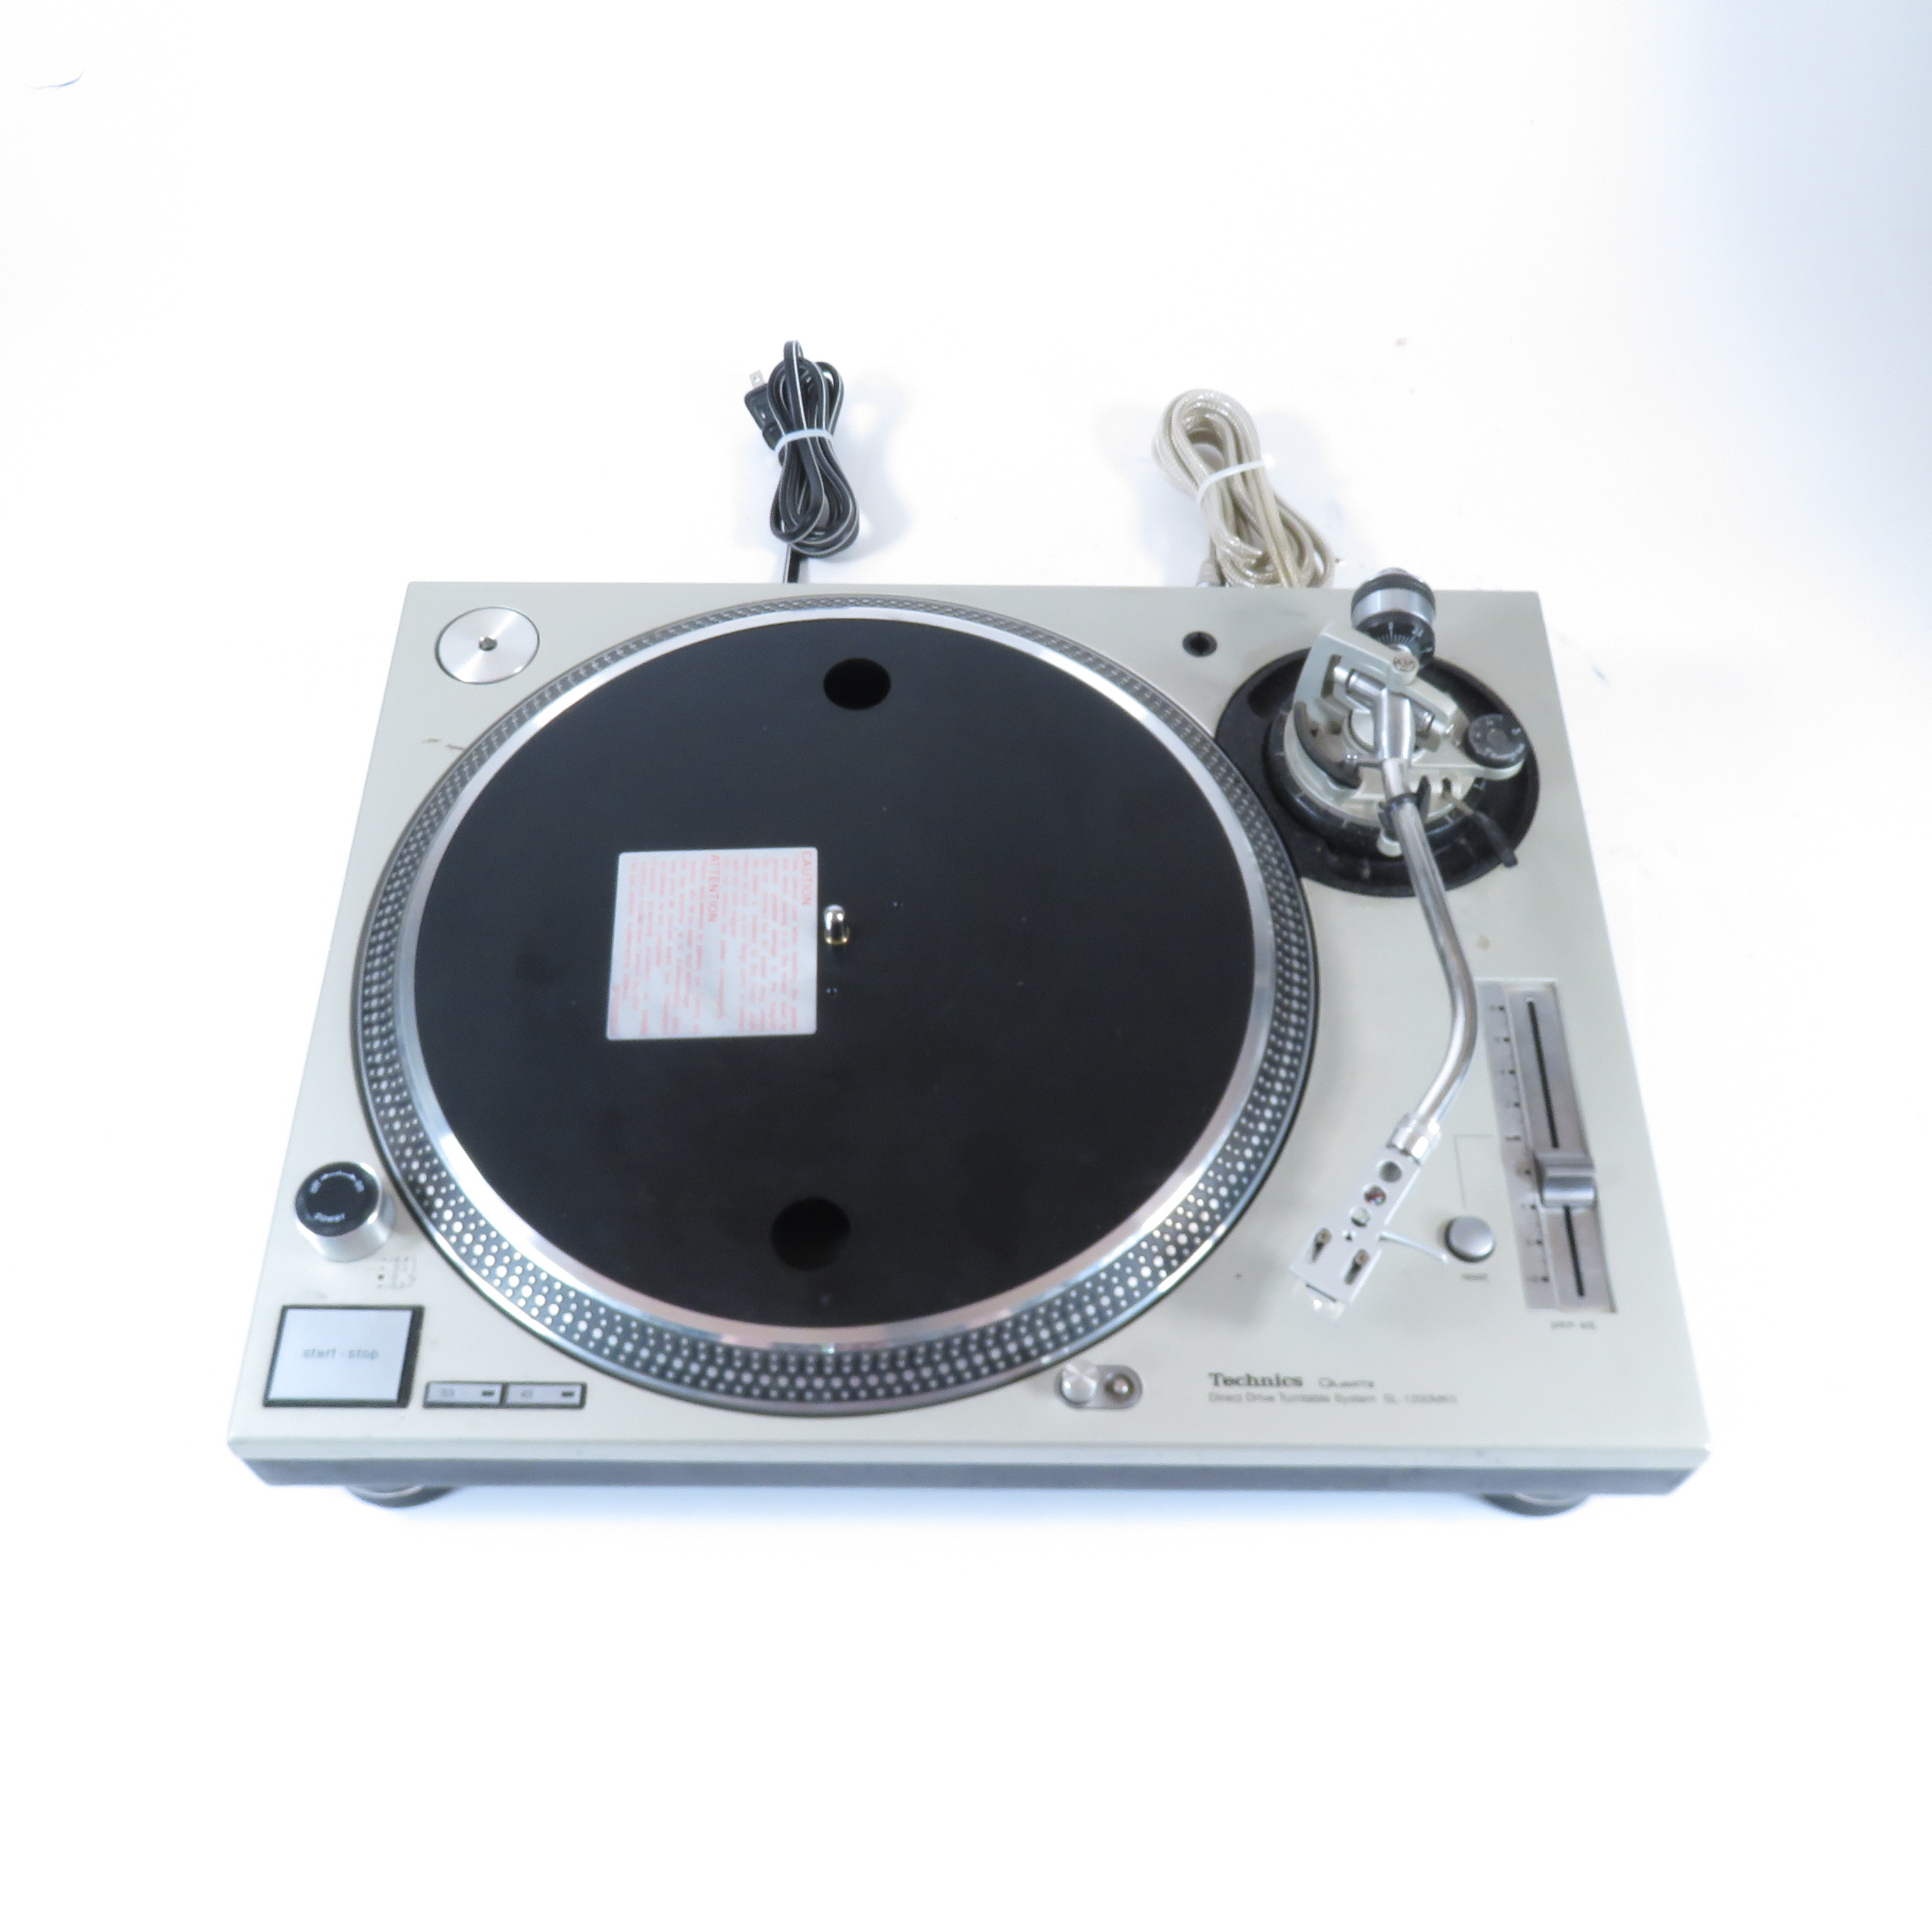 Technics SL-1200MK5 Direct Drive Analog DJ Turntable